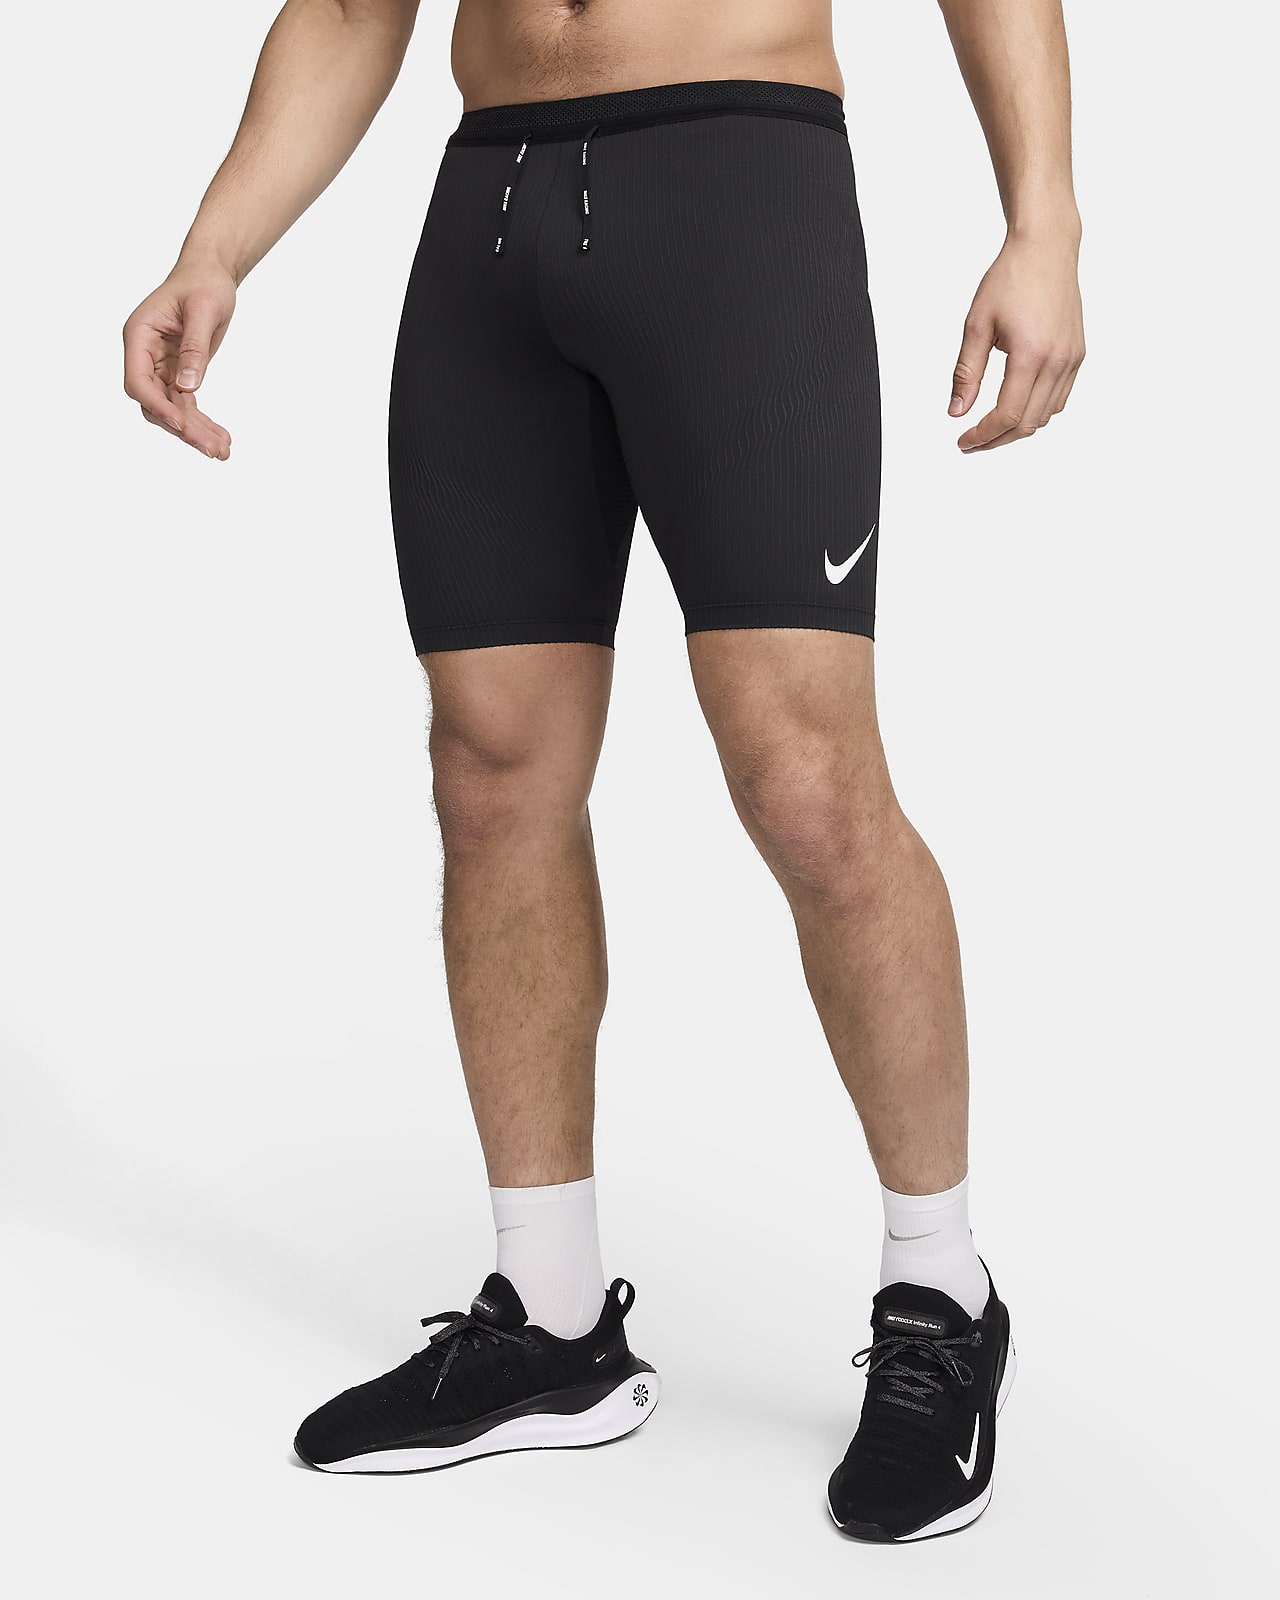 Nike Aeroswift 1/2 Tights Running Shorts Men's Multi Size Red DA1429 014